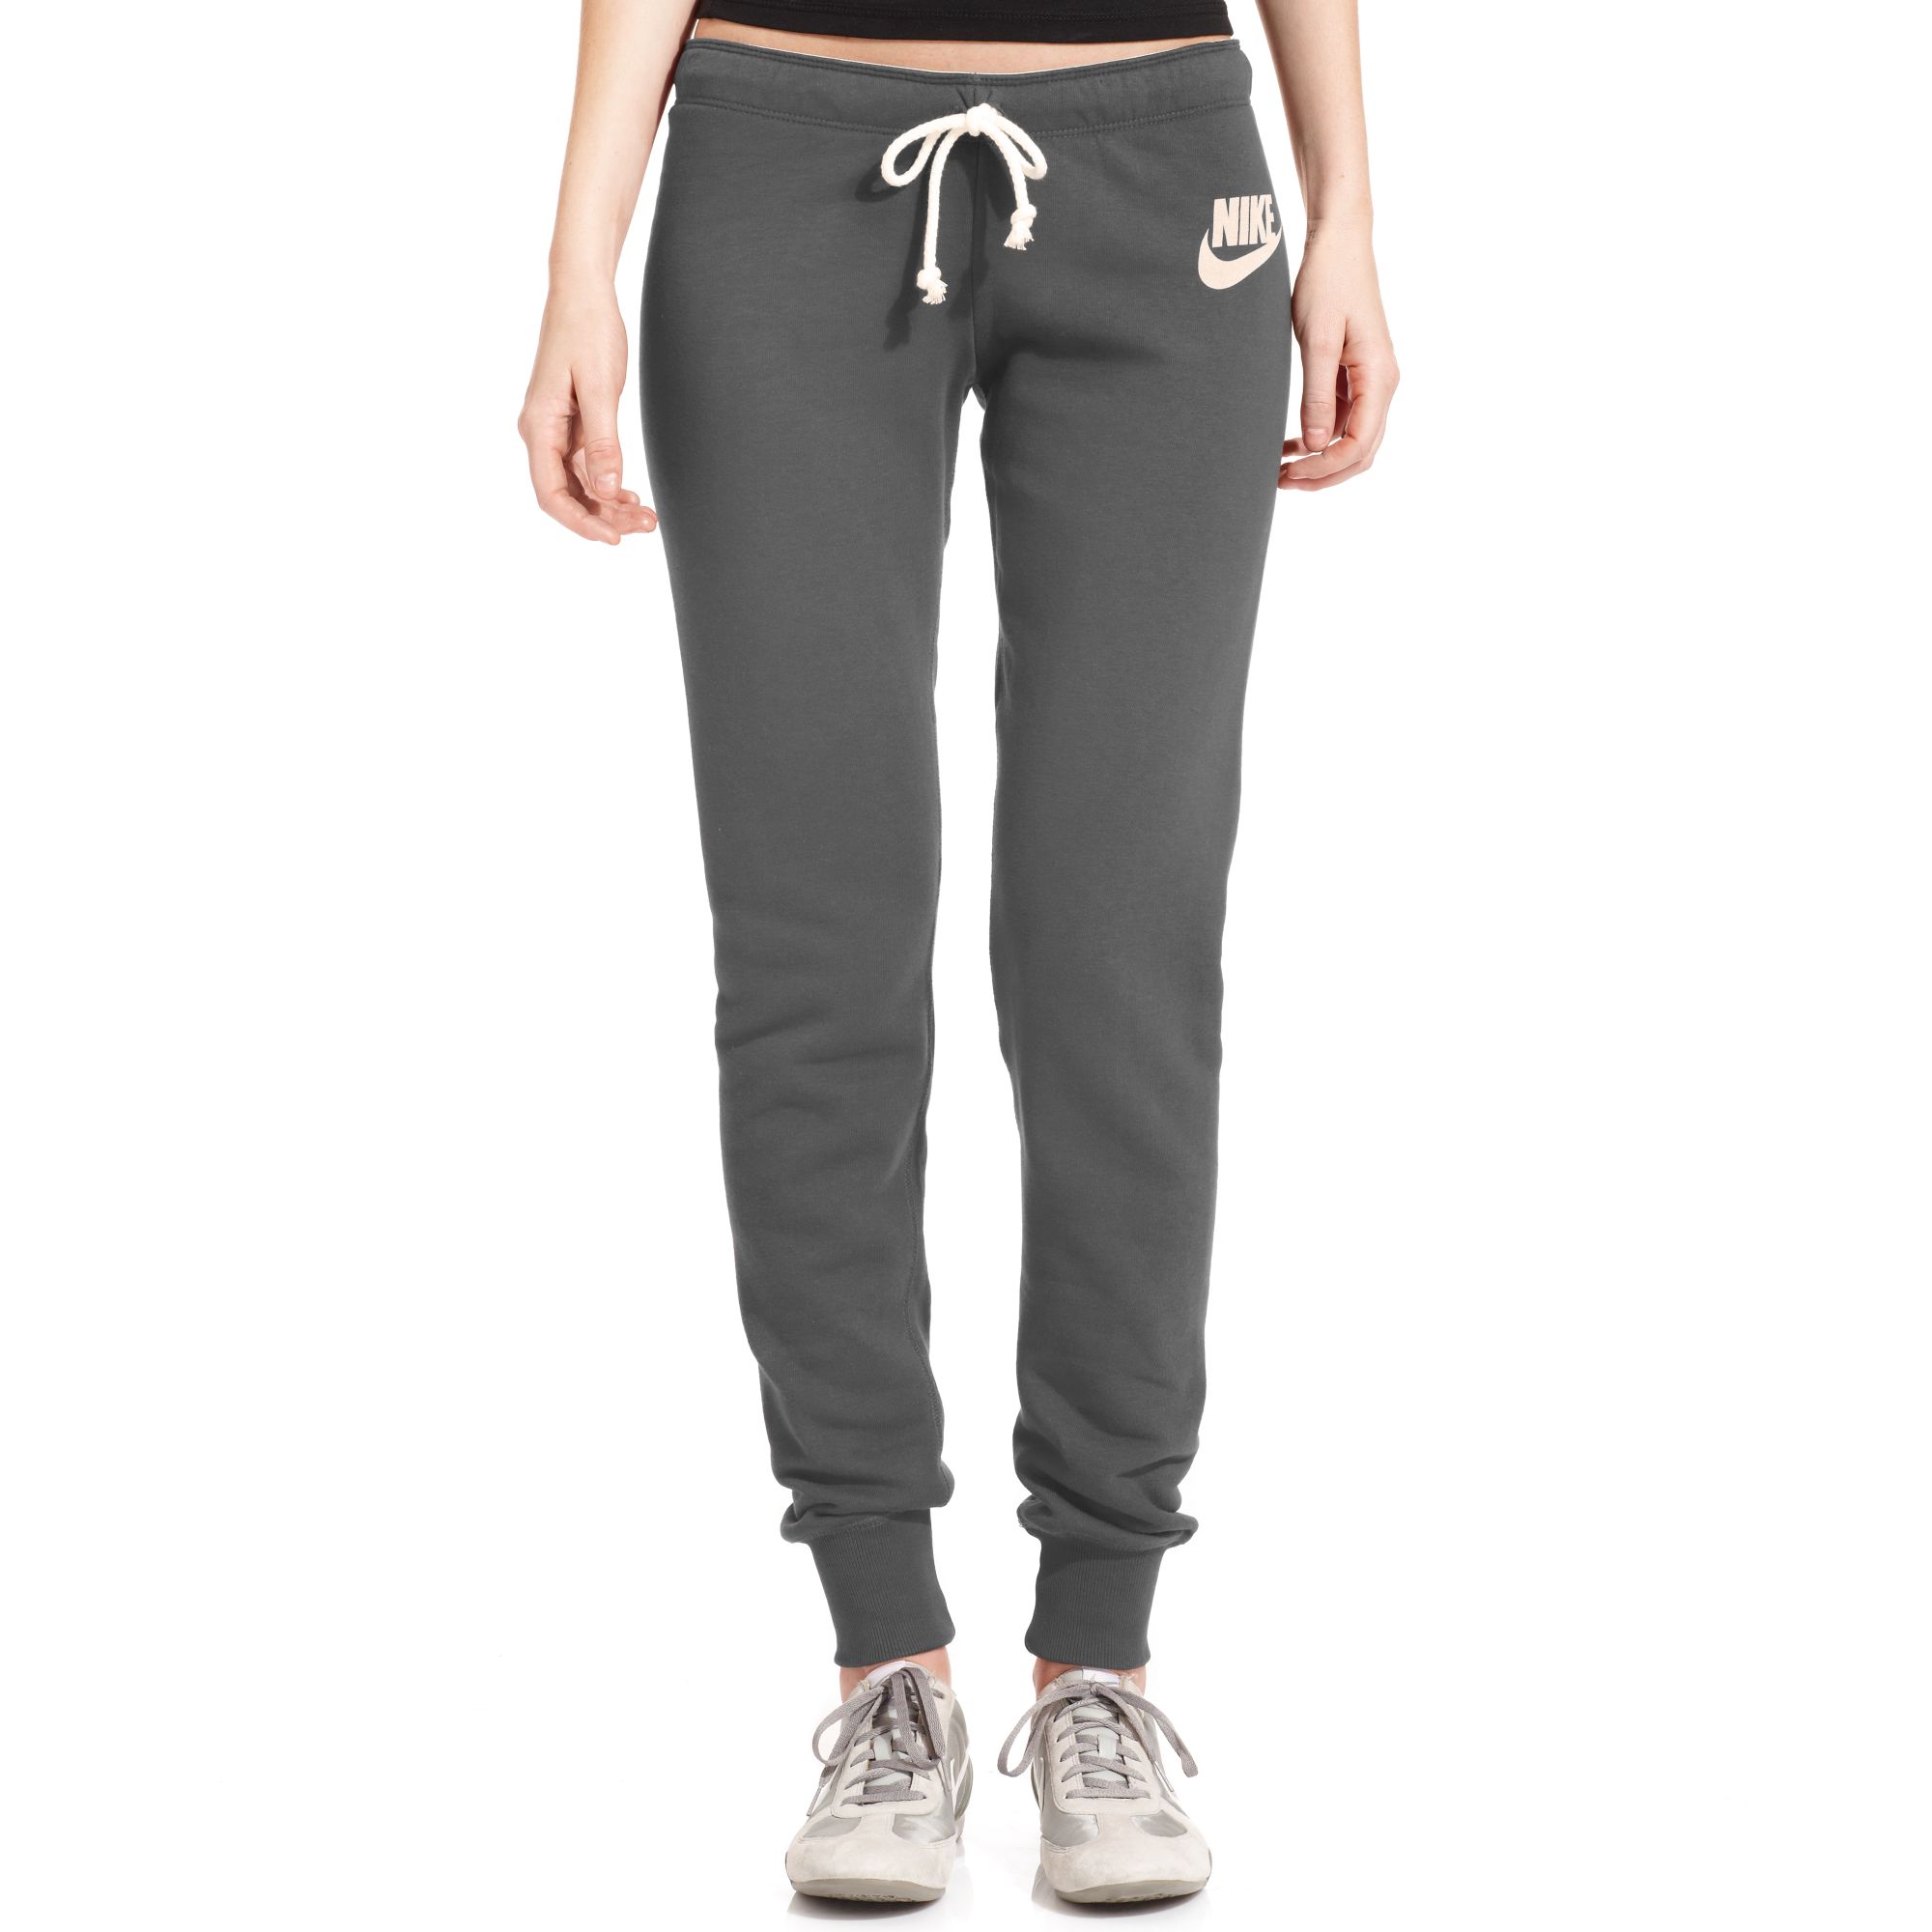 Lyst - Nike Slim-Fit Sweatpants in Gray